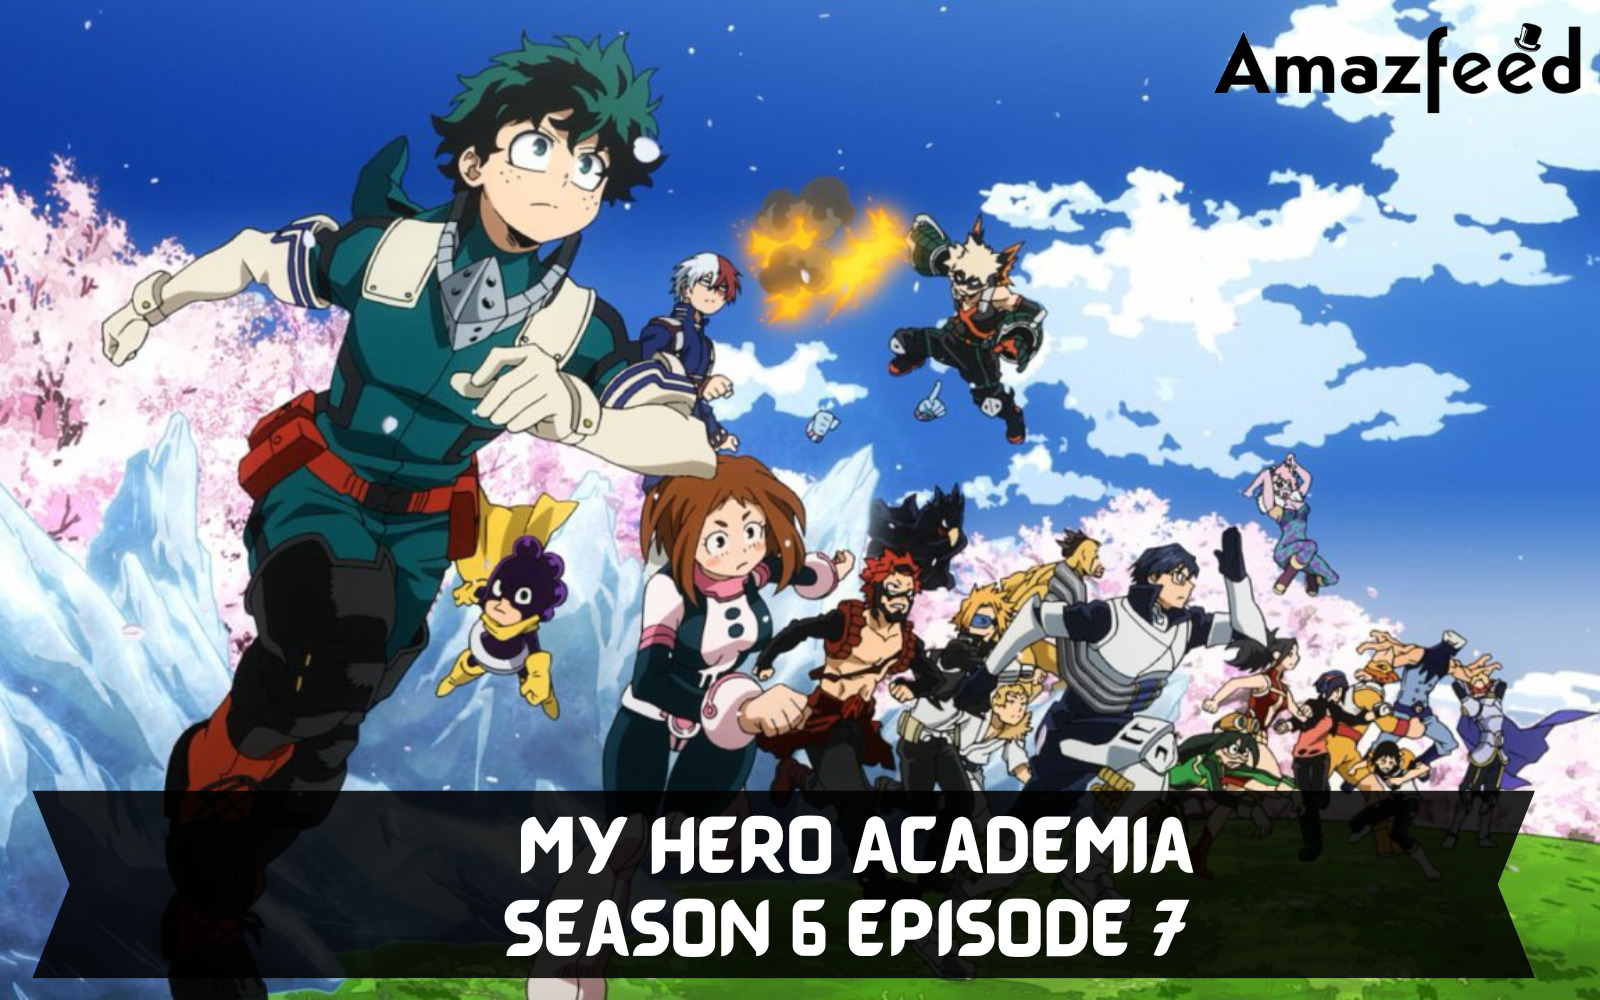 My Hero Academia Season 6 Episode 7 cast